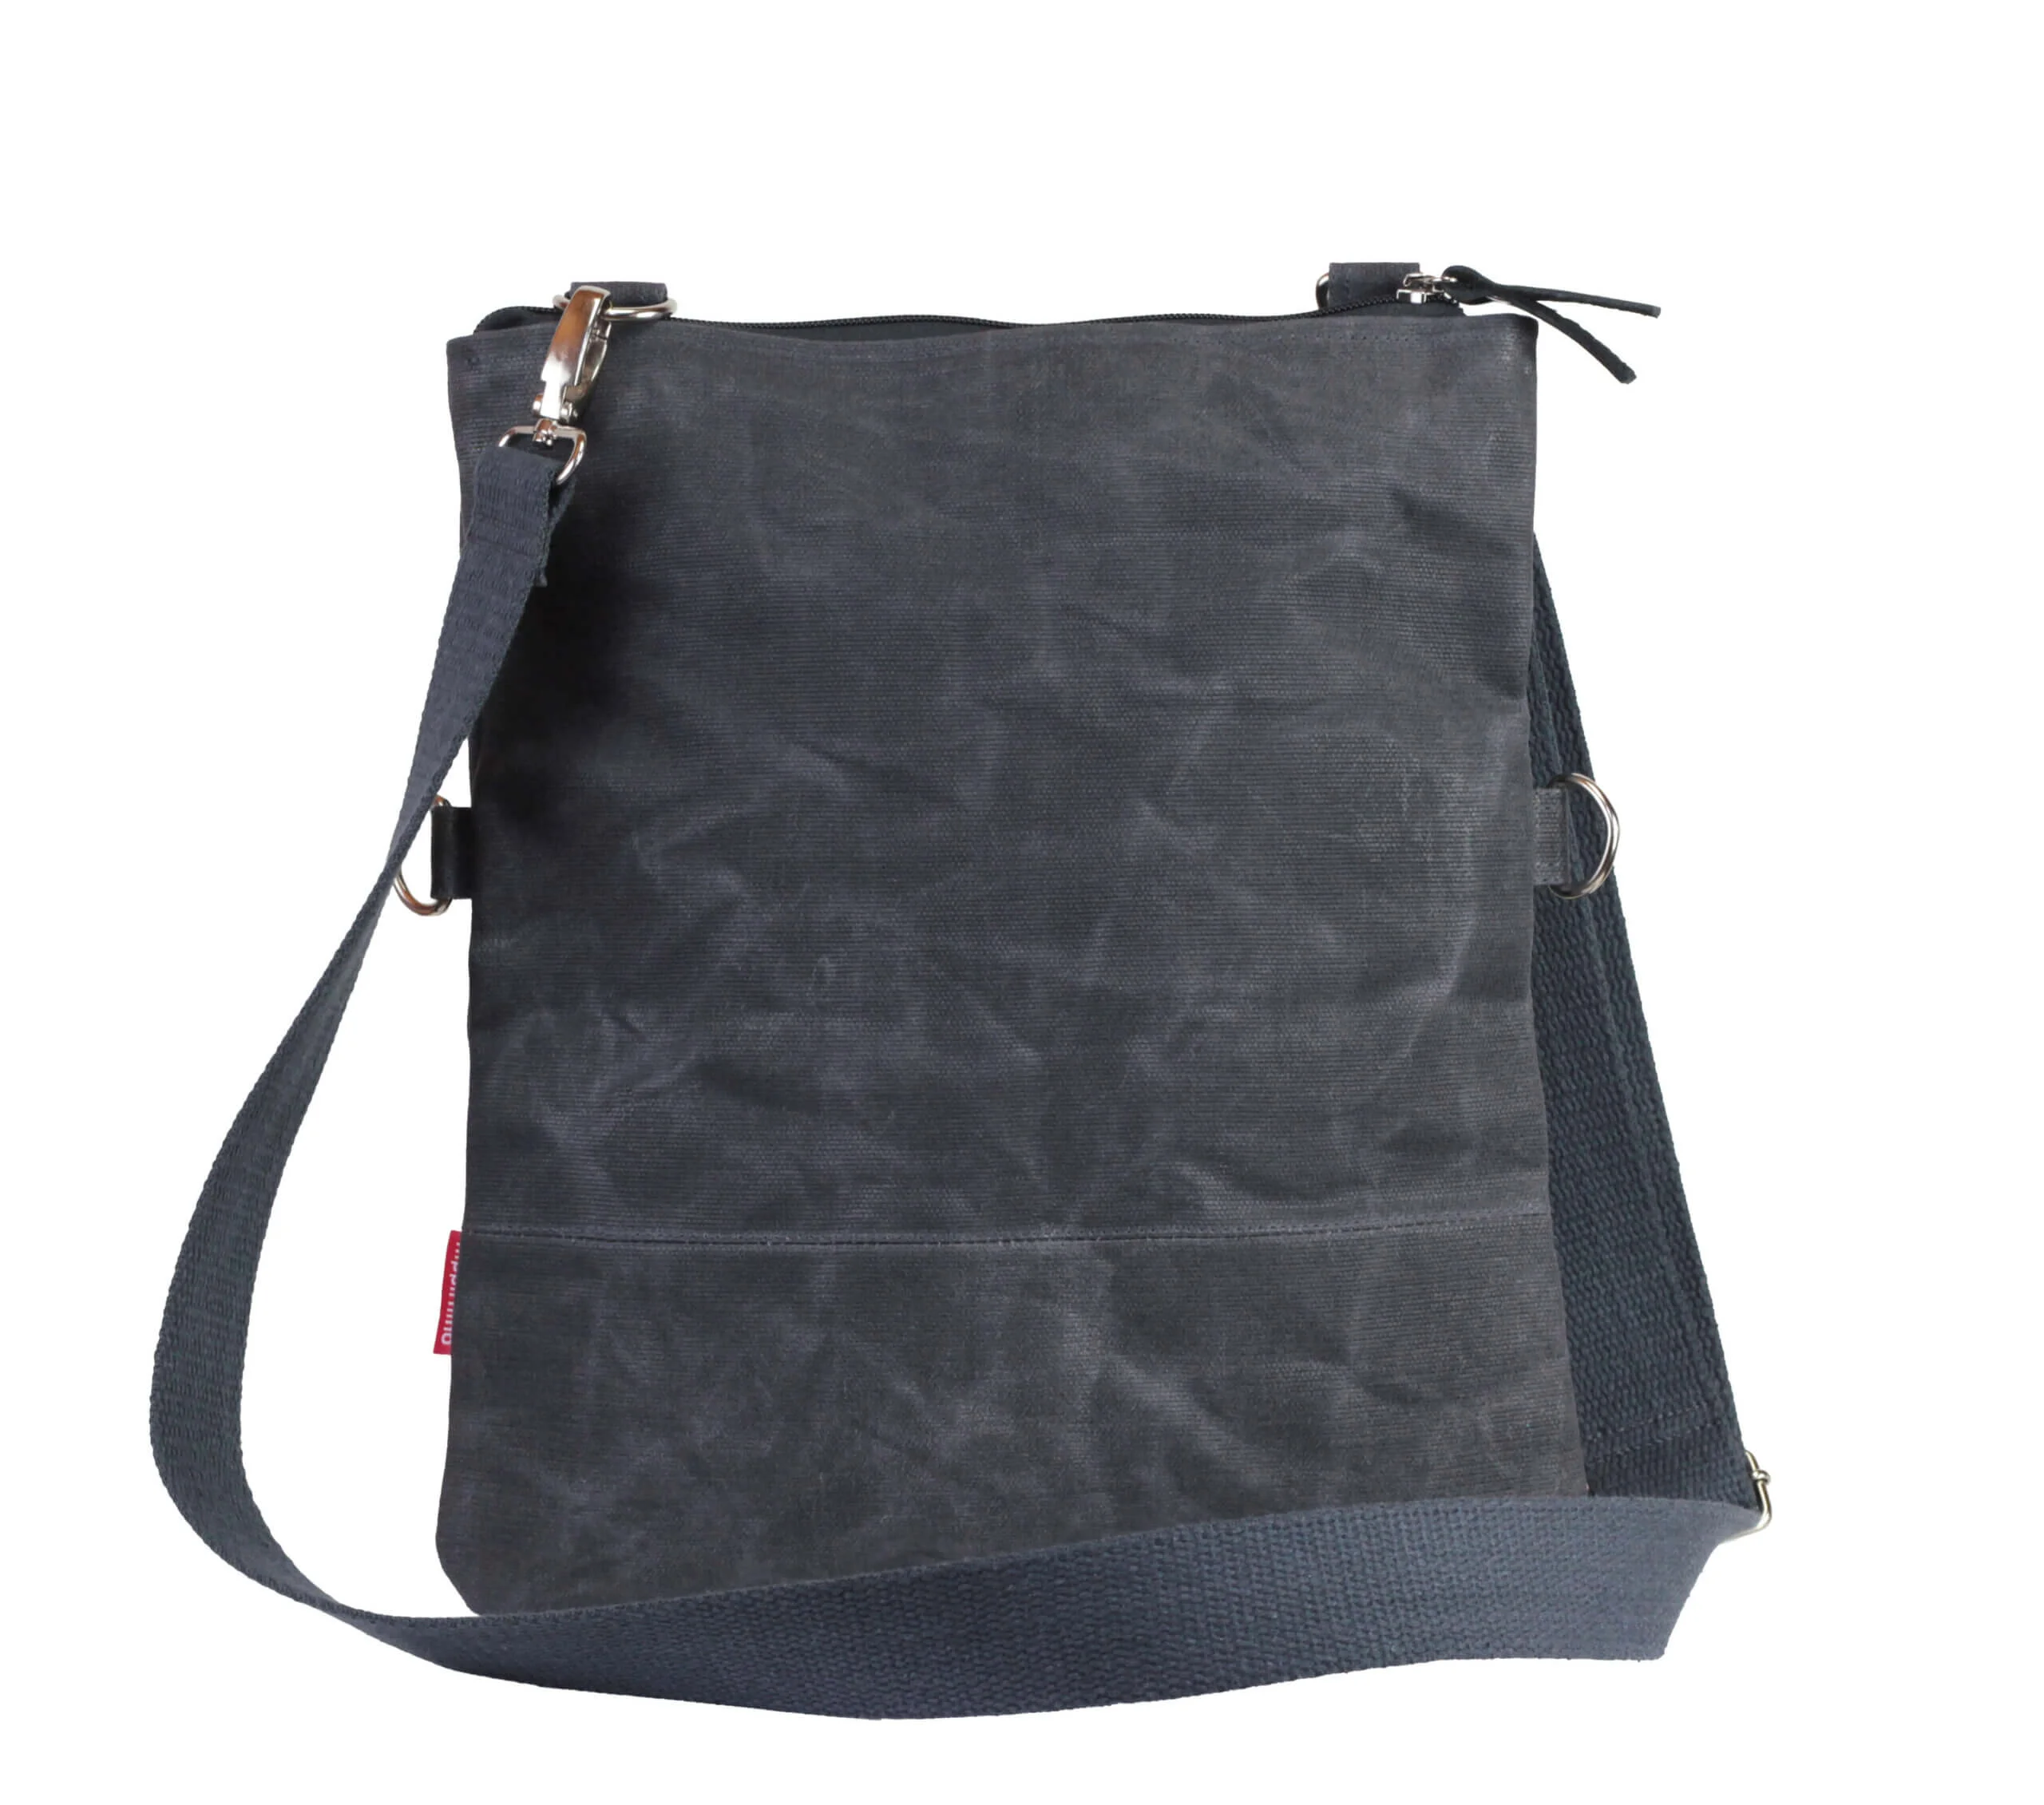 Waxed Canvas Hobo Bag, Convertible Crossbody Tote Bag